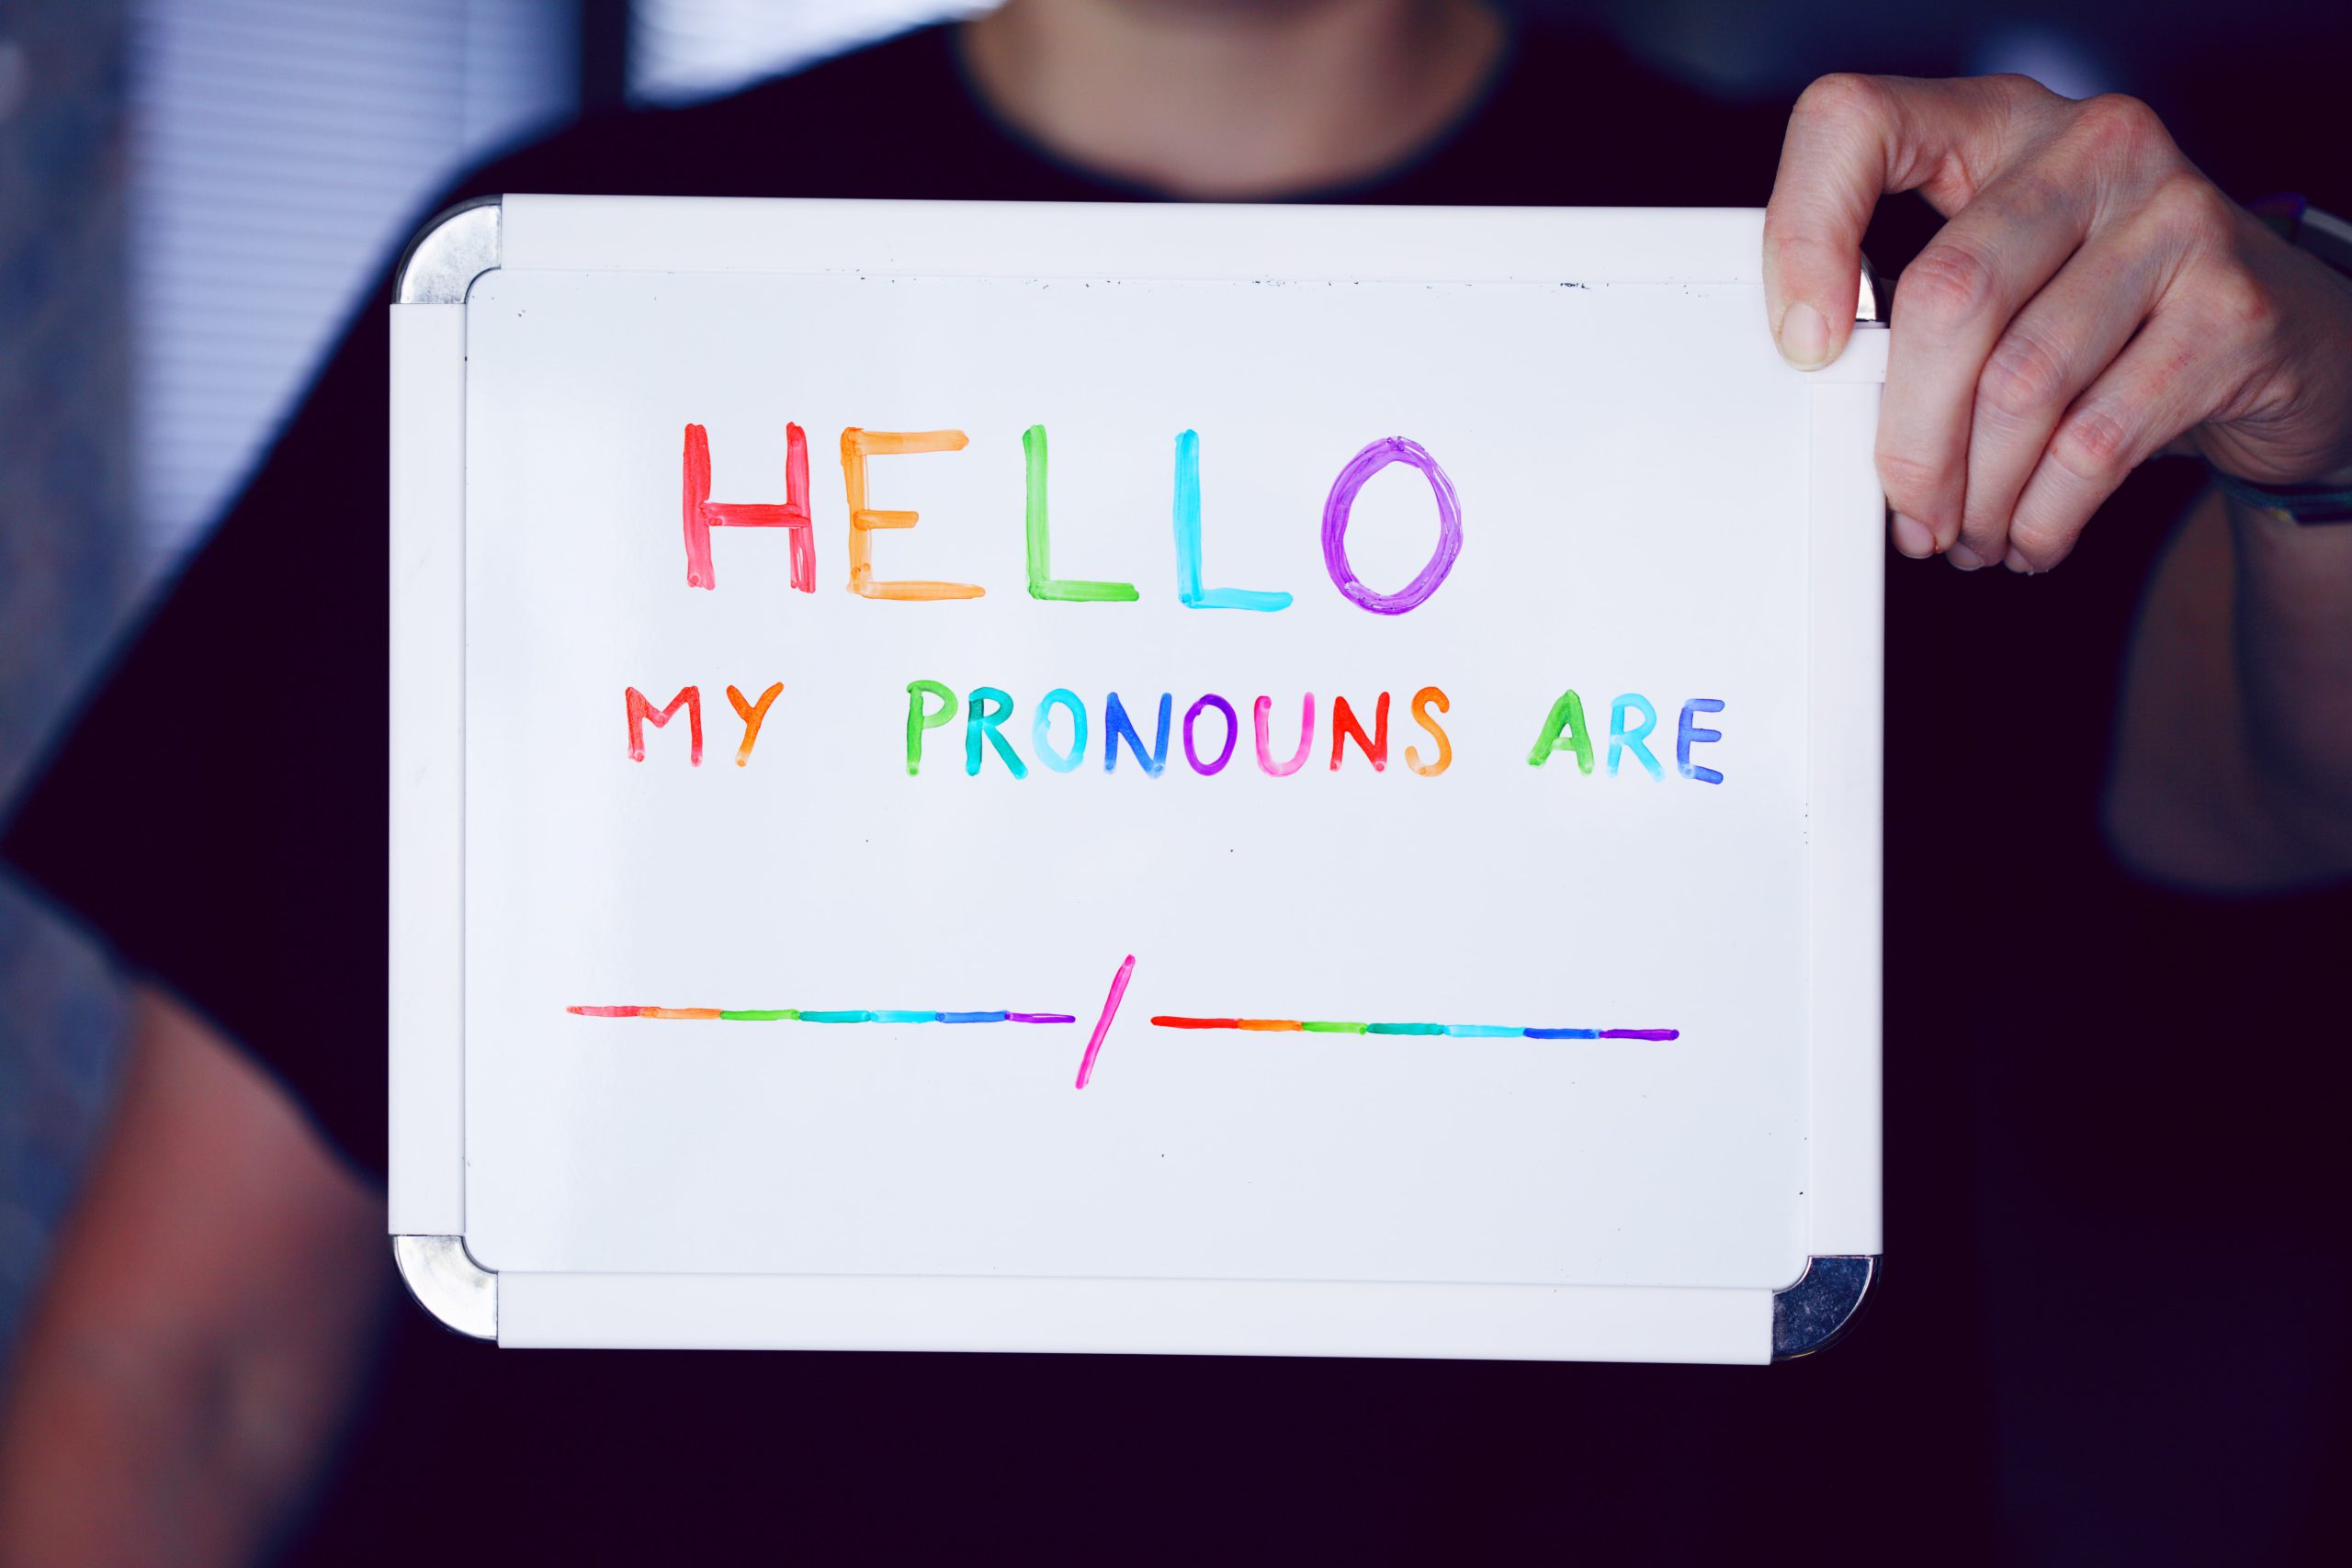 "Hello, my pronouns are..." written on a whiteboard